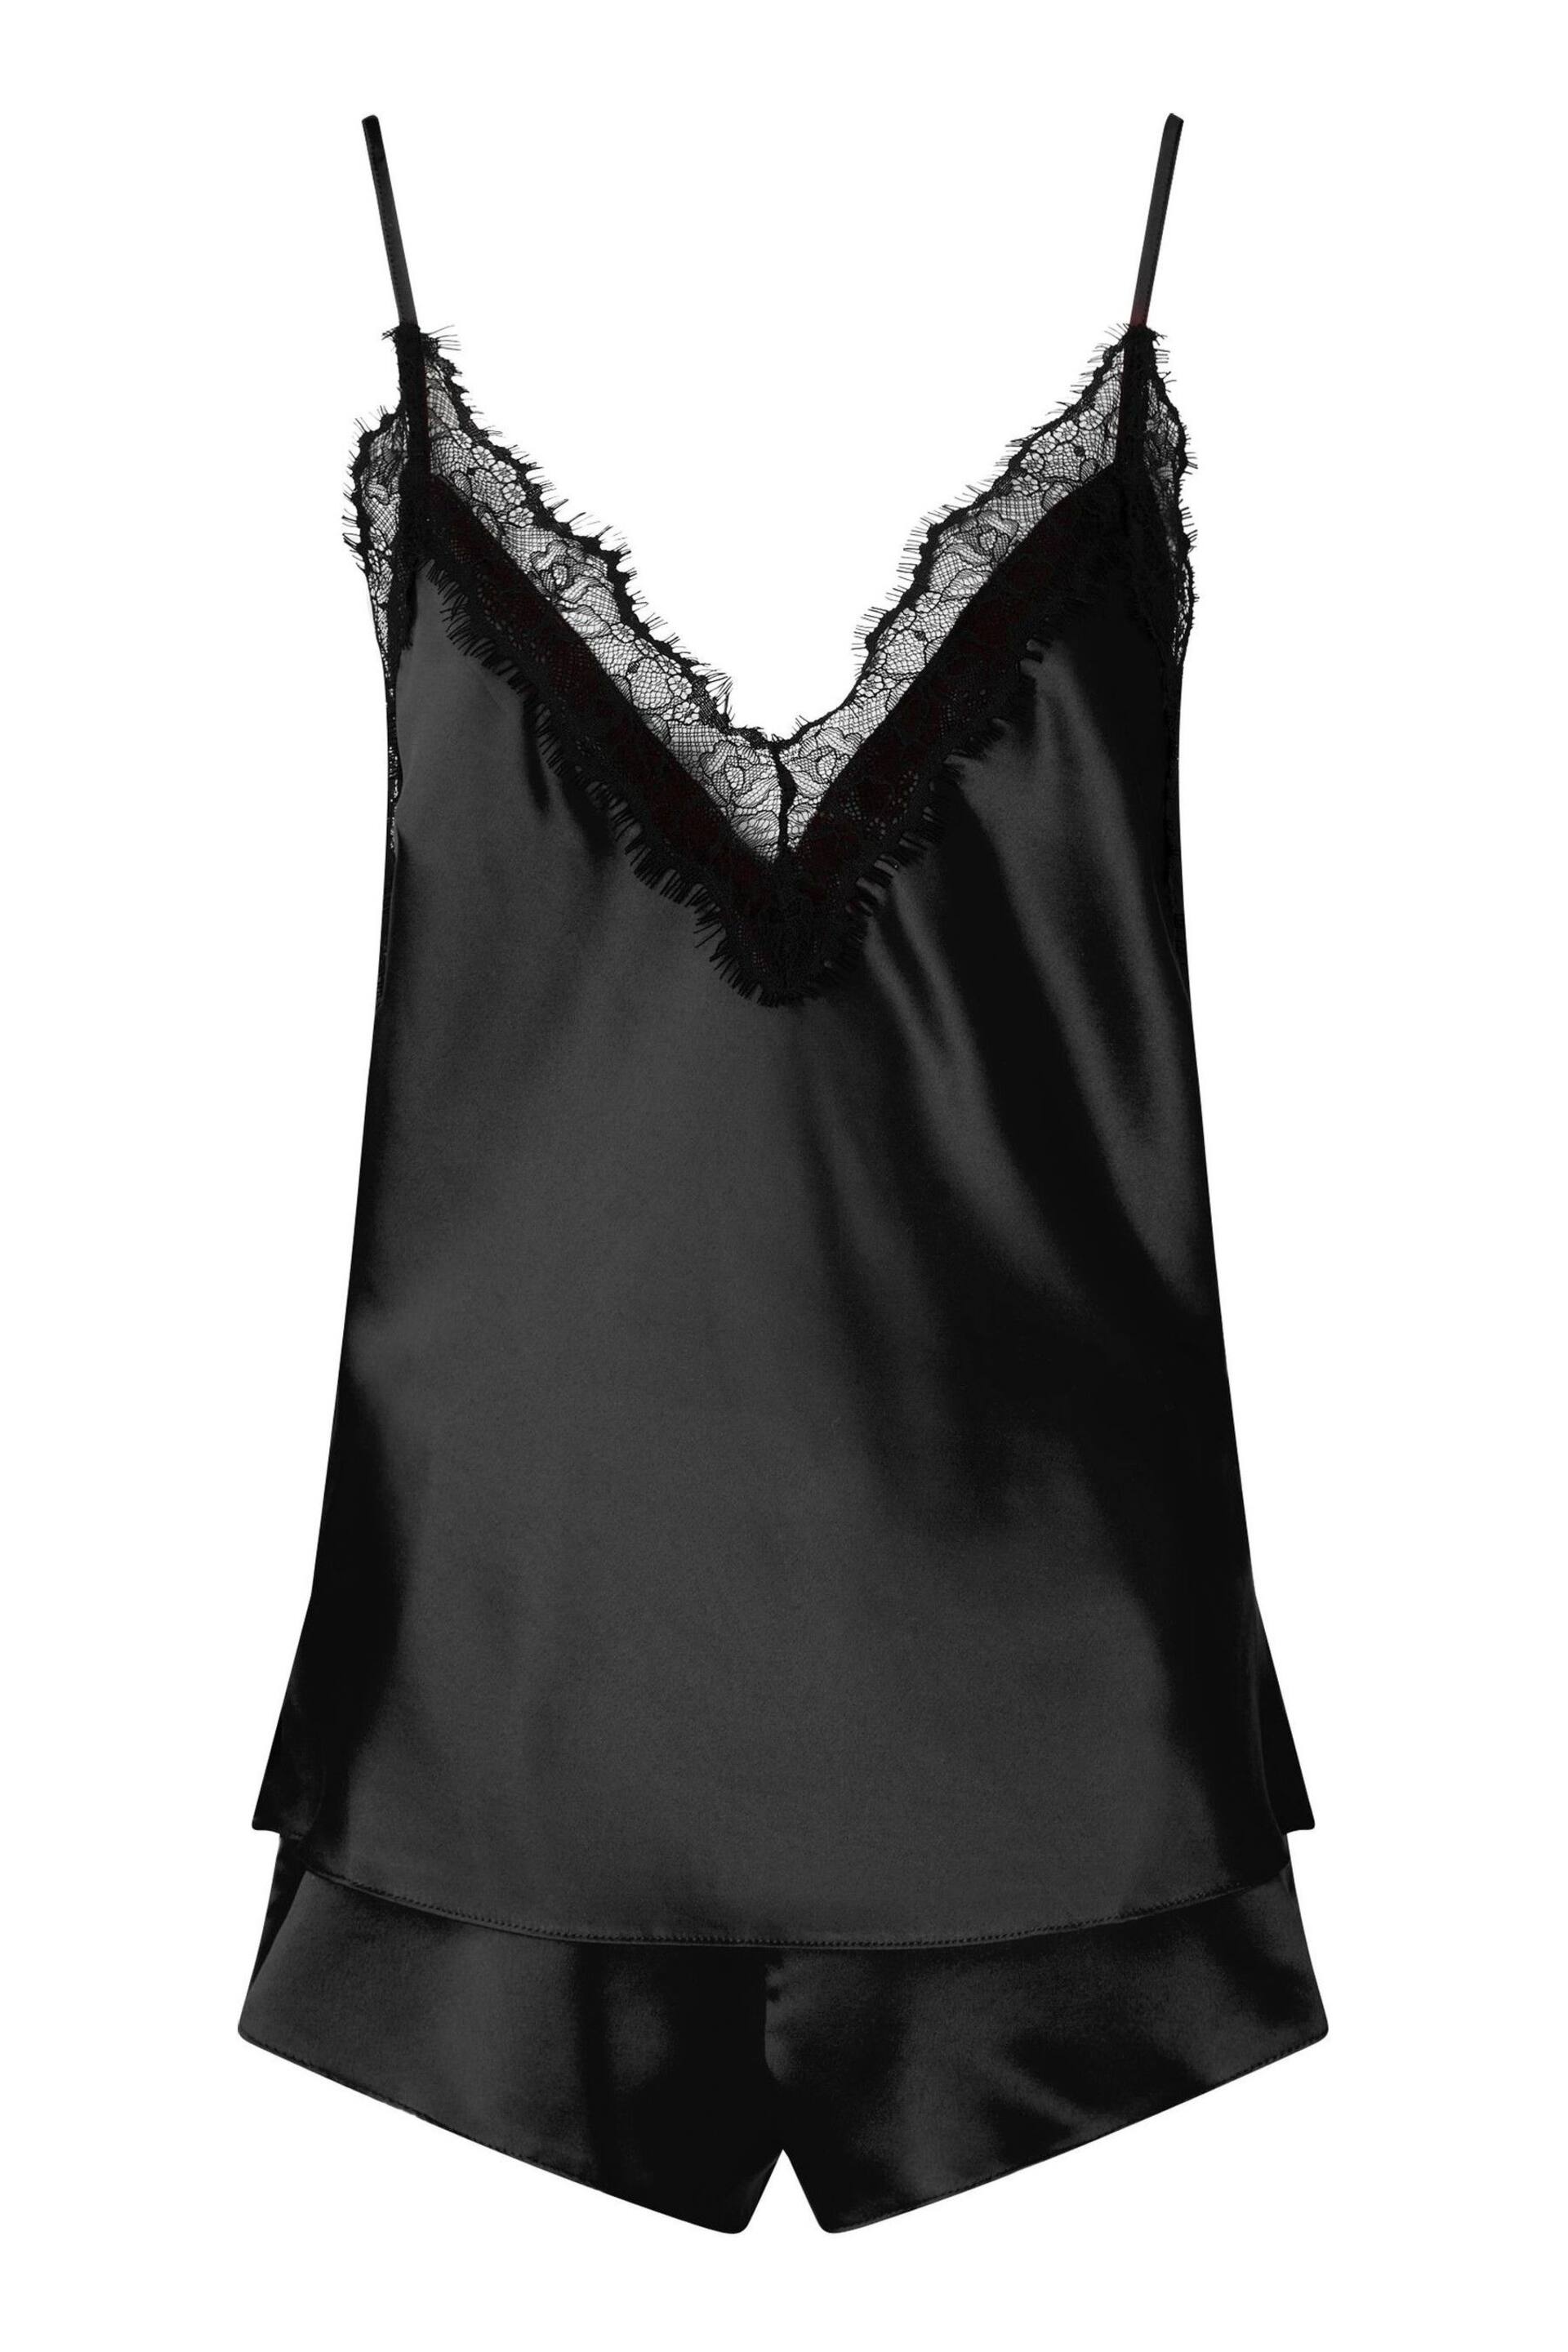 Ann Summers Black Cerise Lace and Satin Cami Pyjama Set - Image 5 of 5